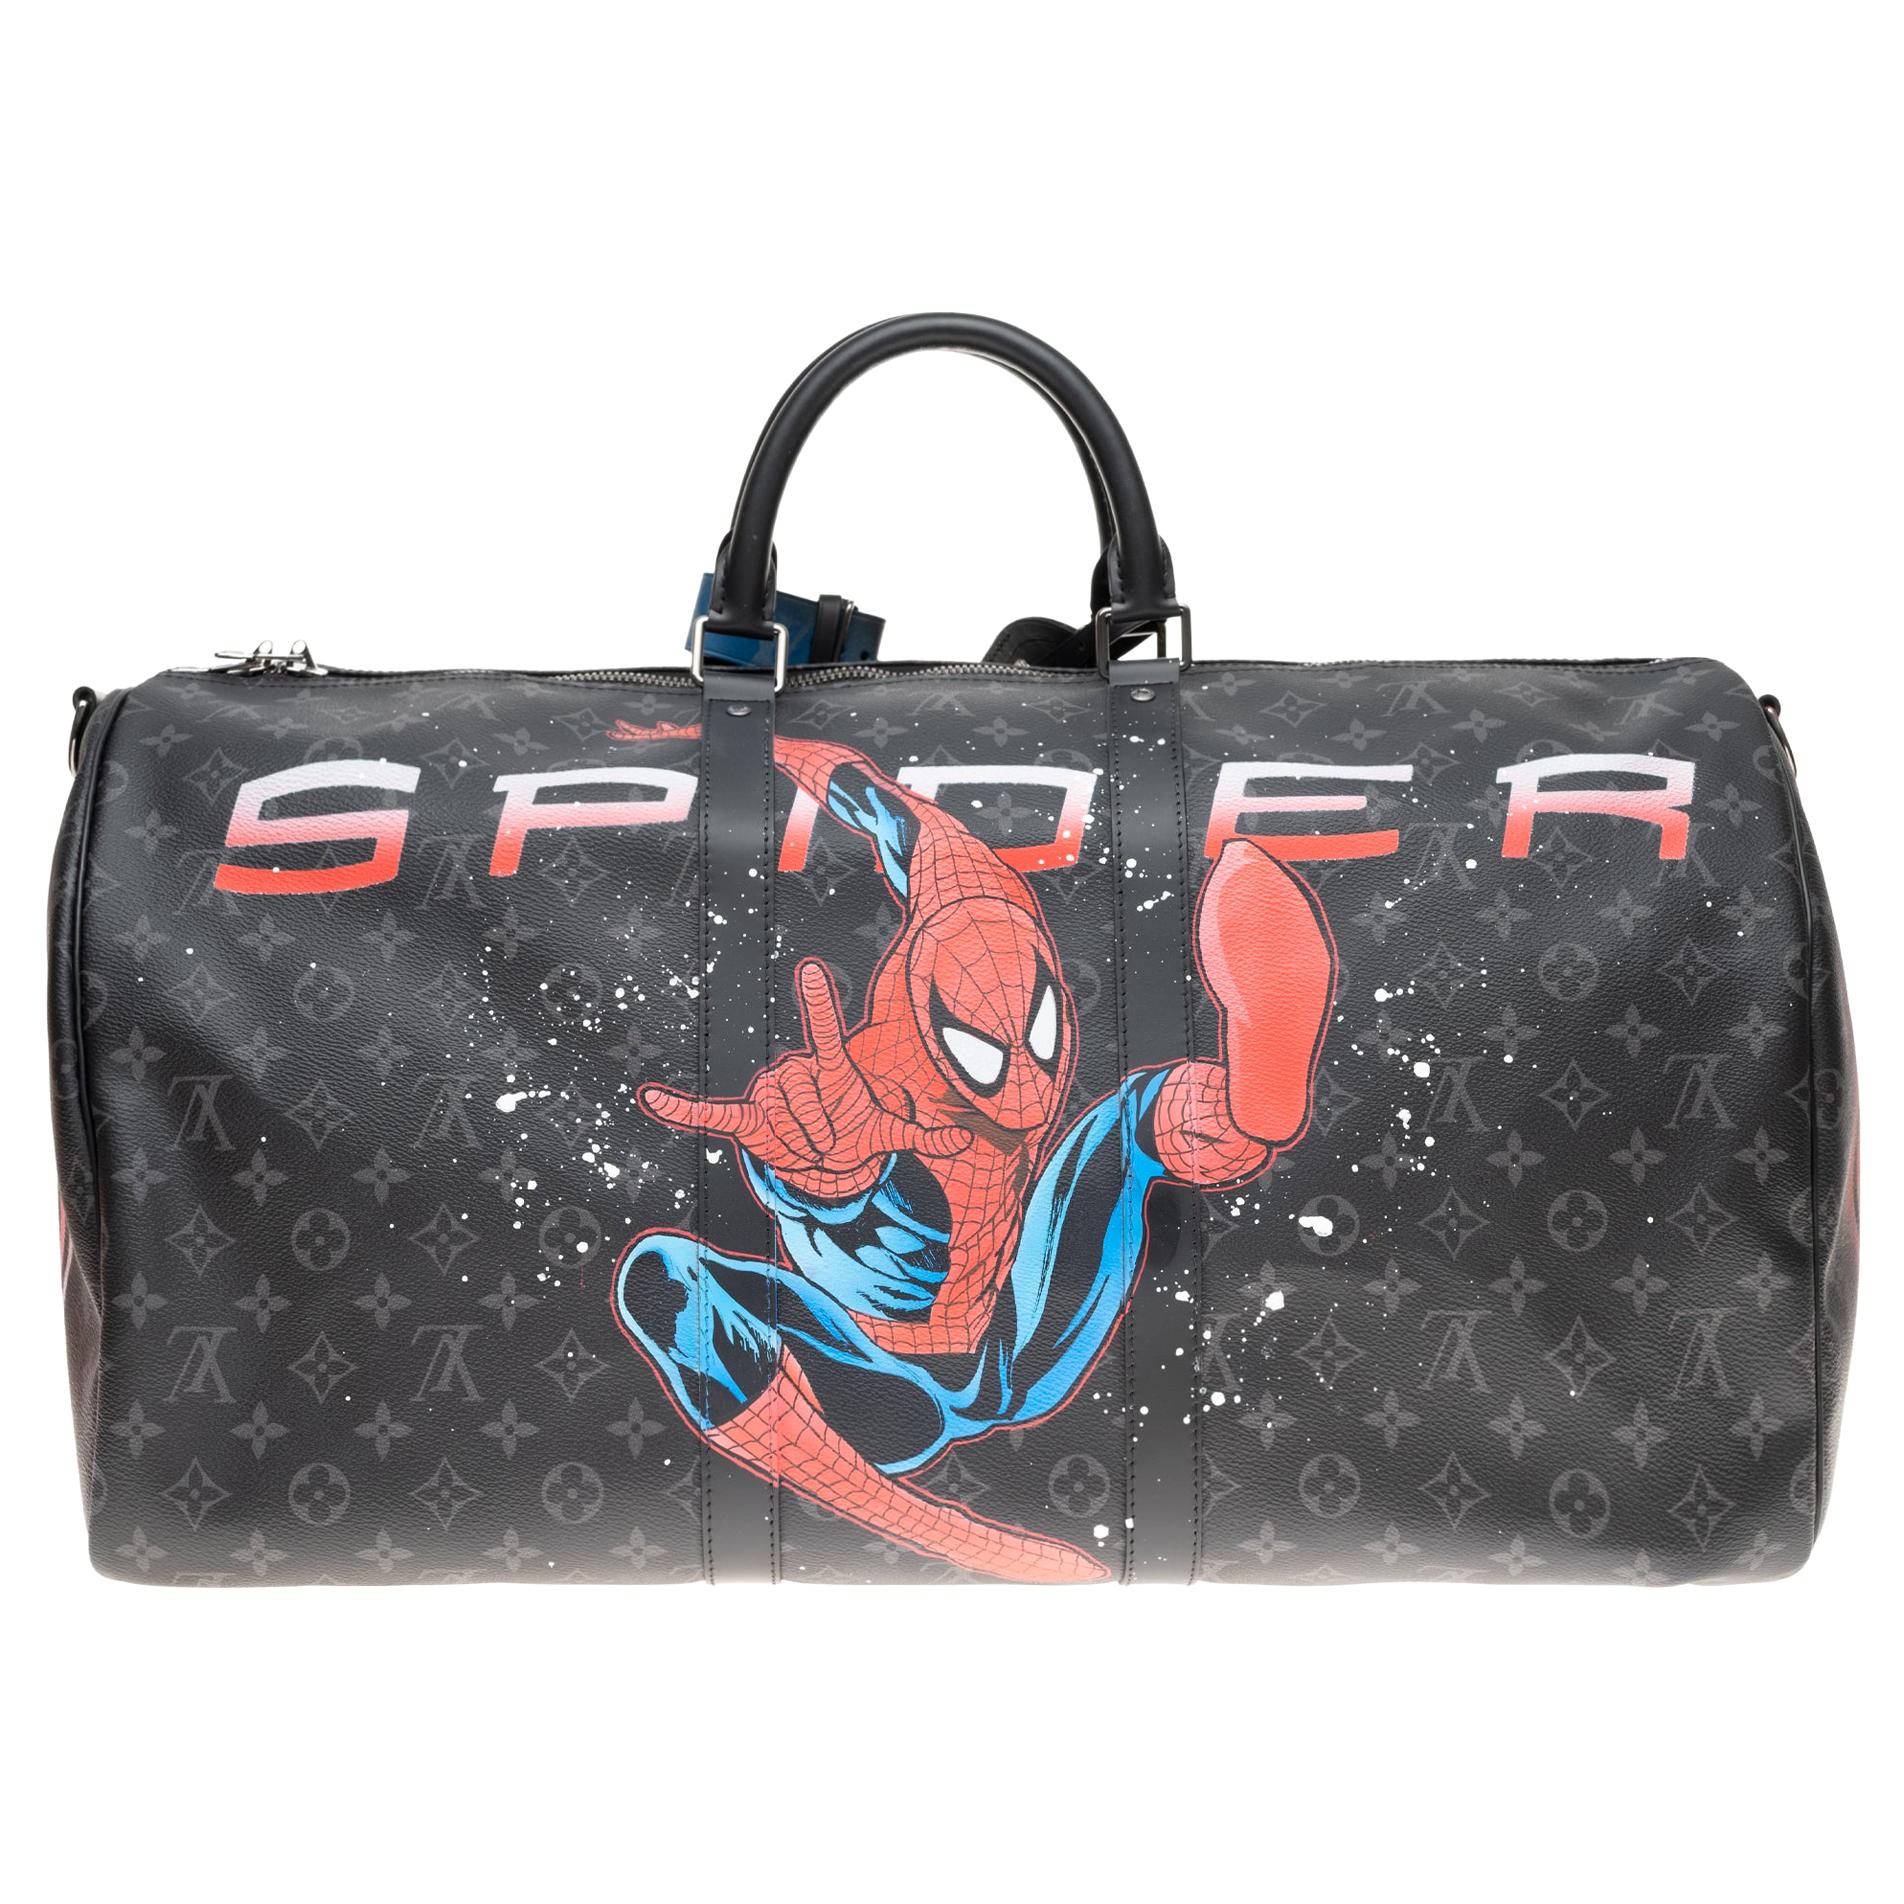 Brand new SPIDERBAG "SpiderMan"Louis Vuitton Keepall 55 éclipse strap customized